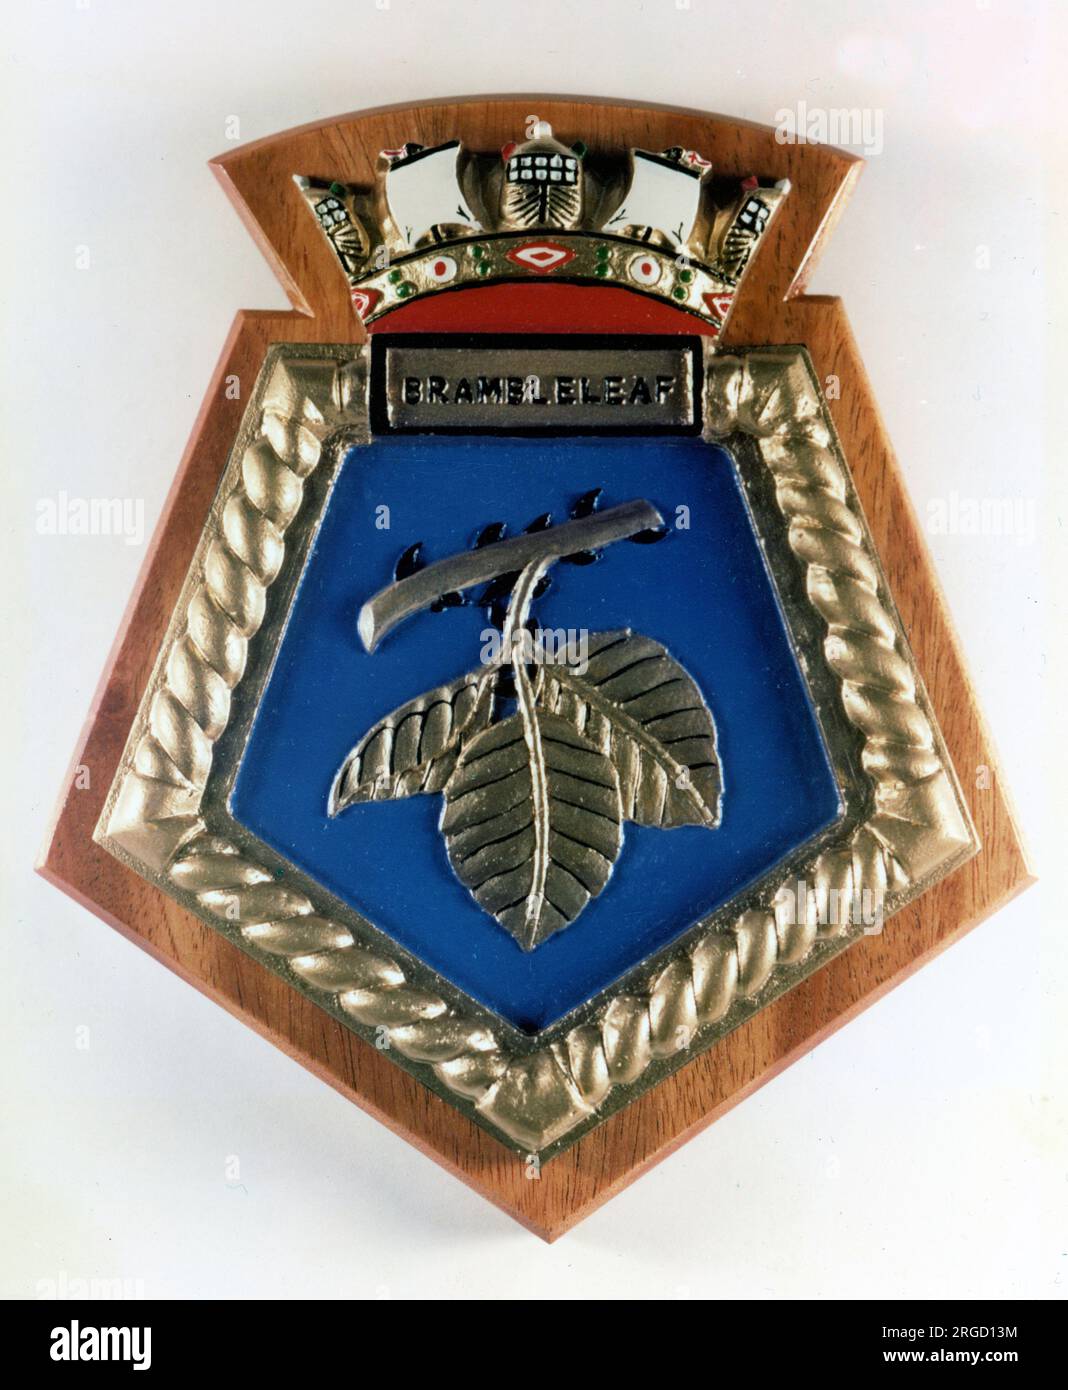 Royal Fleet Auxiliary - RFA Brambleleaf heraldic shield. Stock Photo